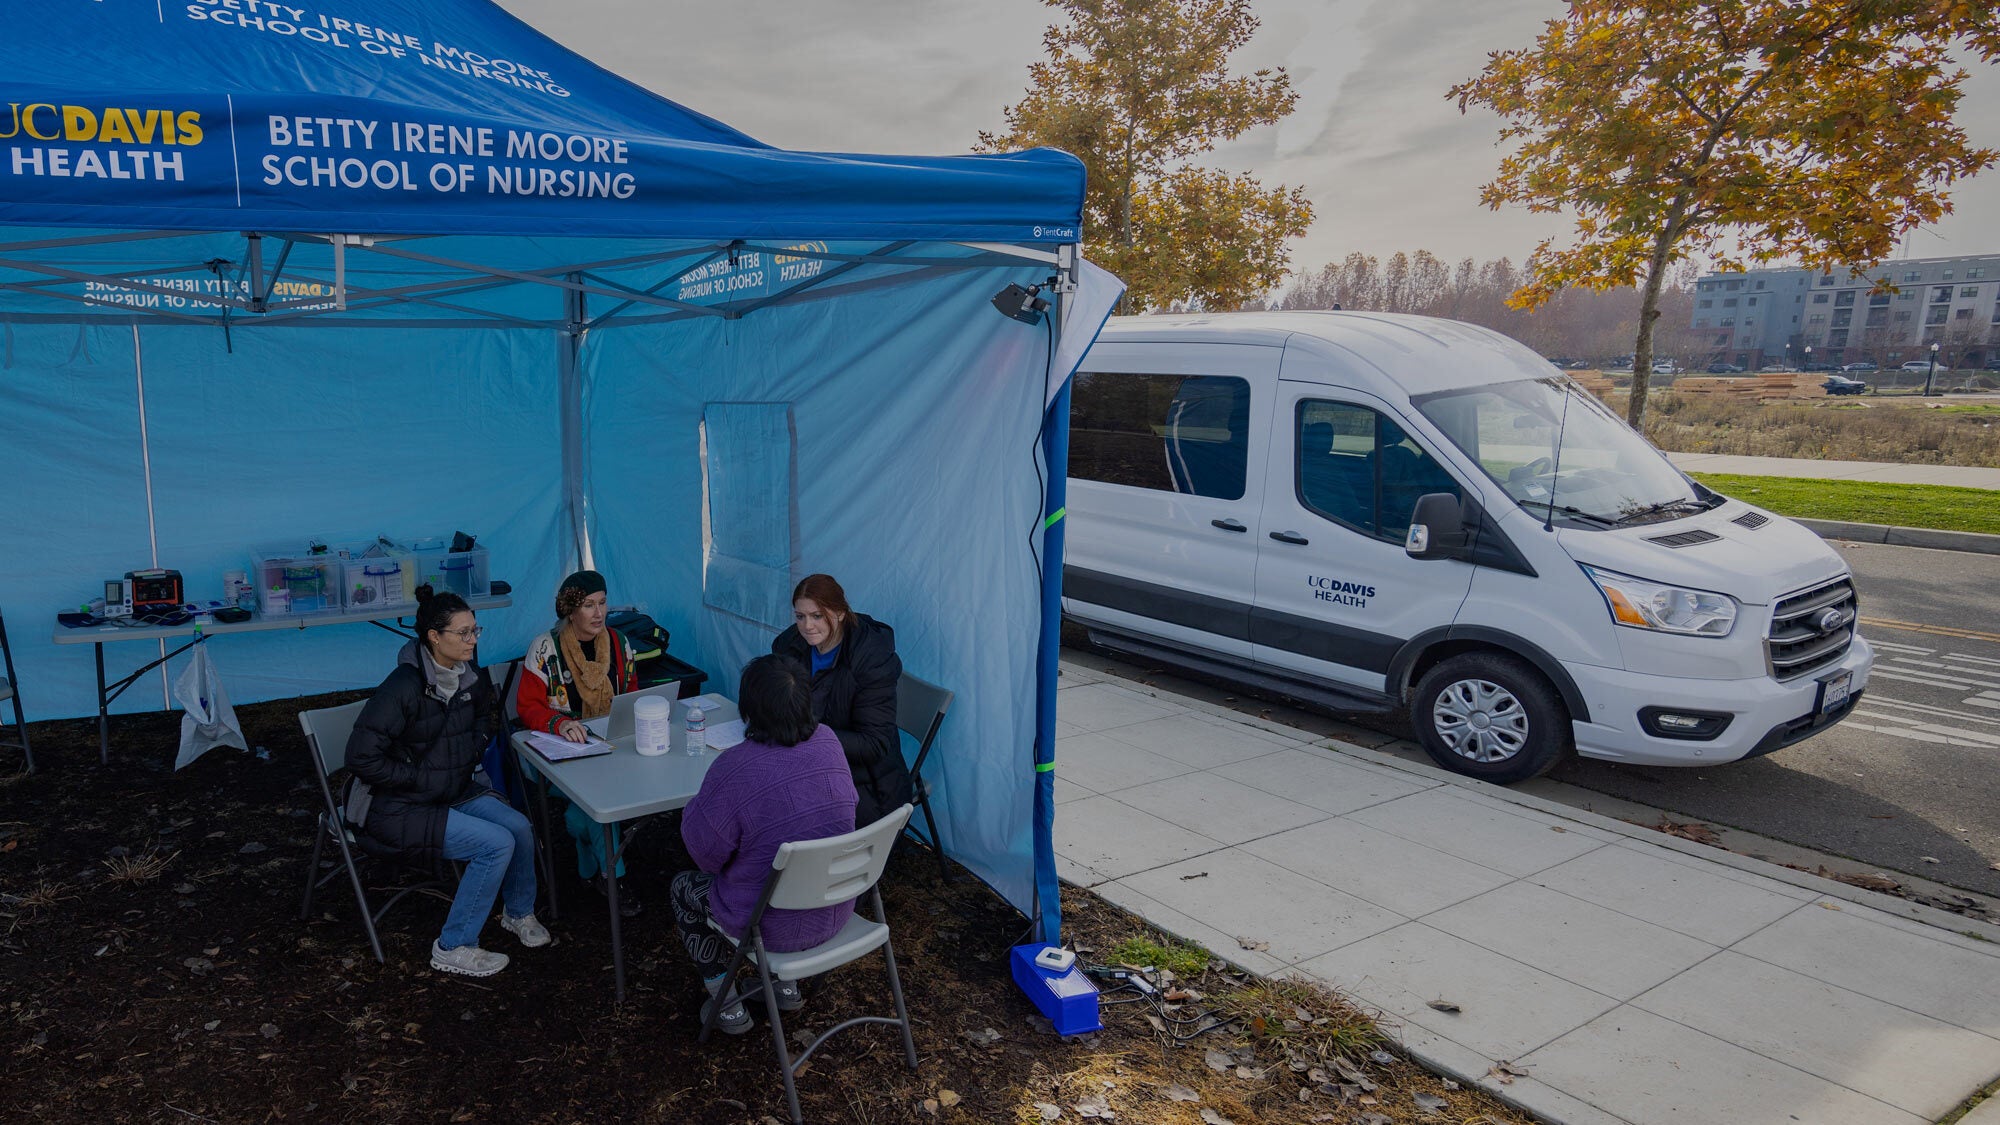 UC Davis School of Nursing's mobile health clinic brings healthcare services directly to the community. (Wayne Tilcock/UC Davis Health)